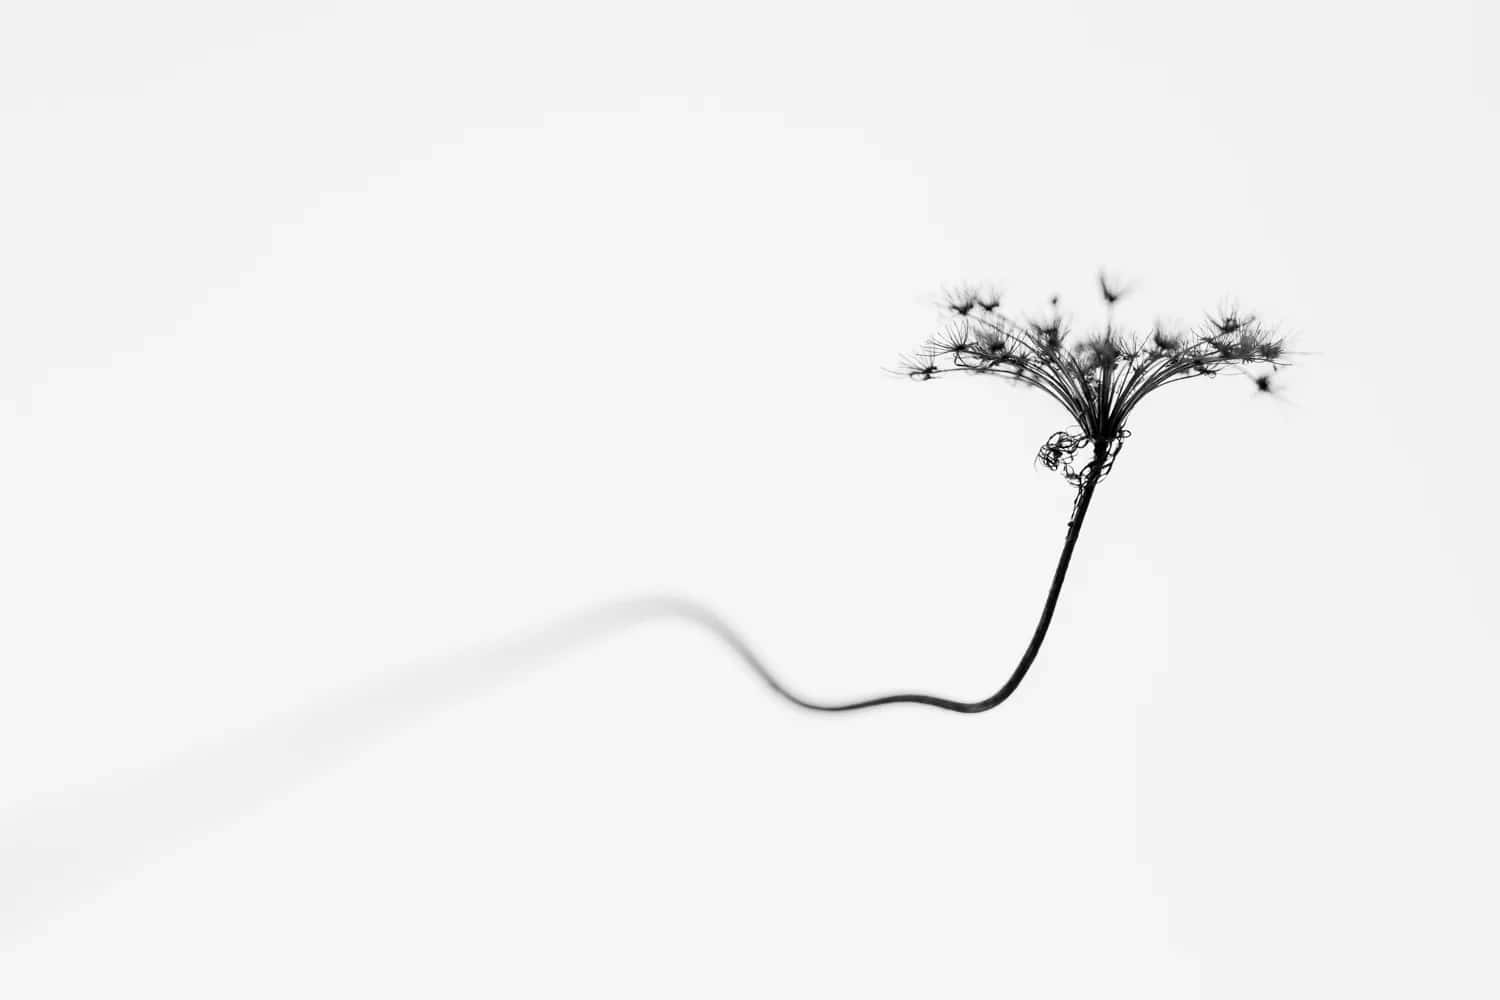 Minimalist Blackand White Flower Silhouette.jpg Wallpaper